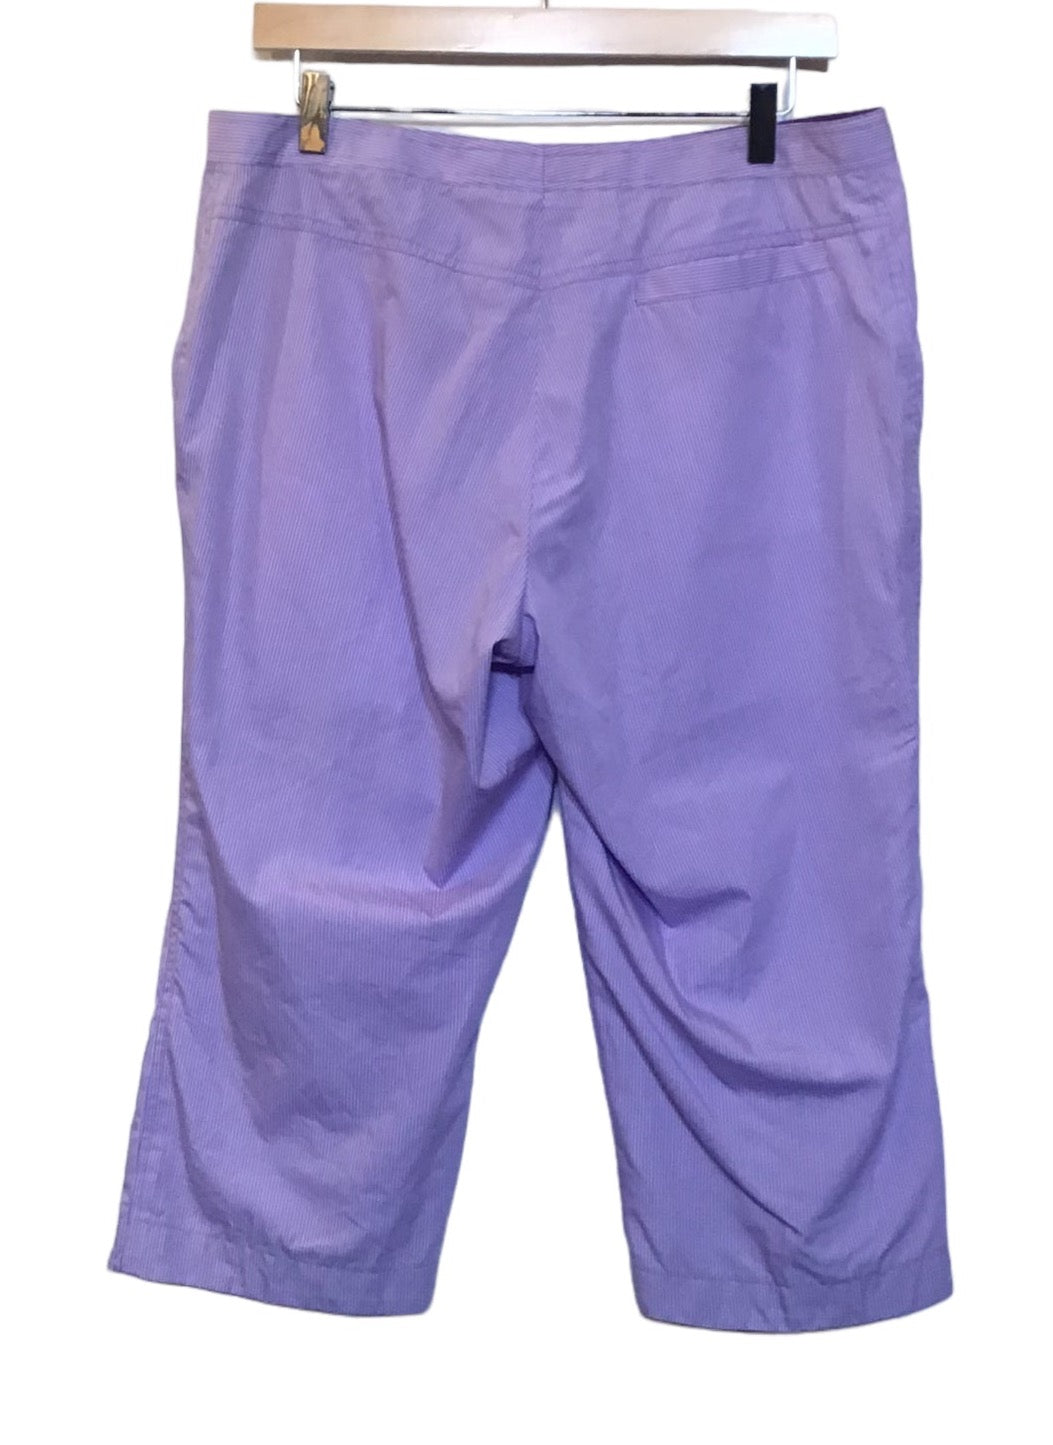 Purple Cropped Pinstripe Trousers (Size XXL)